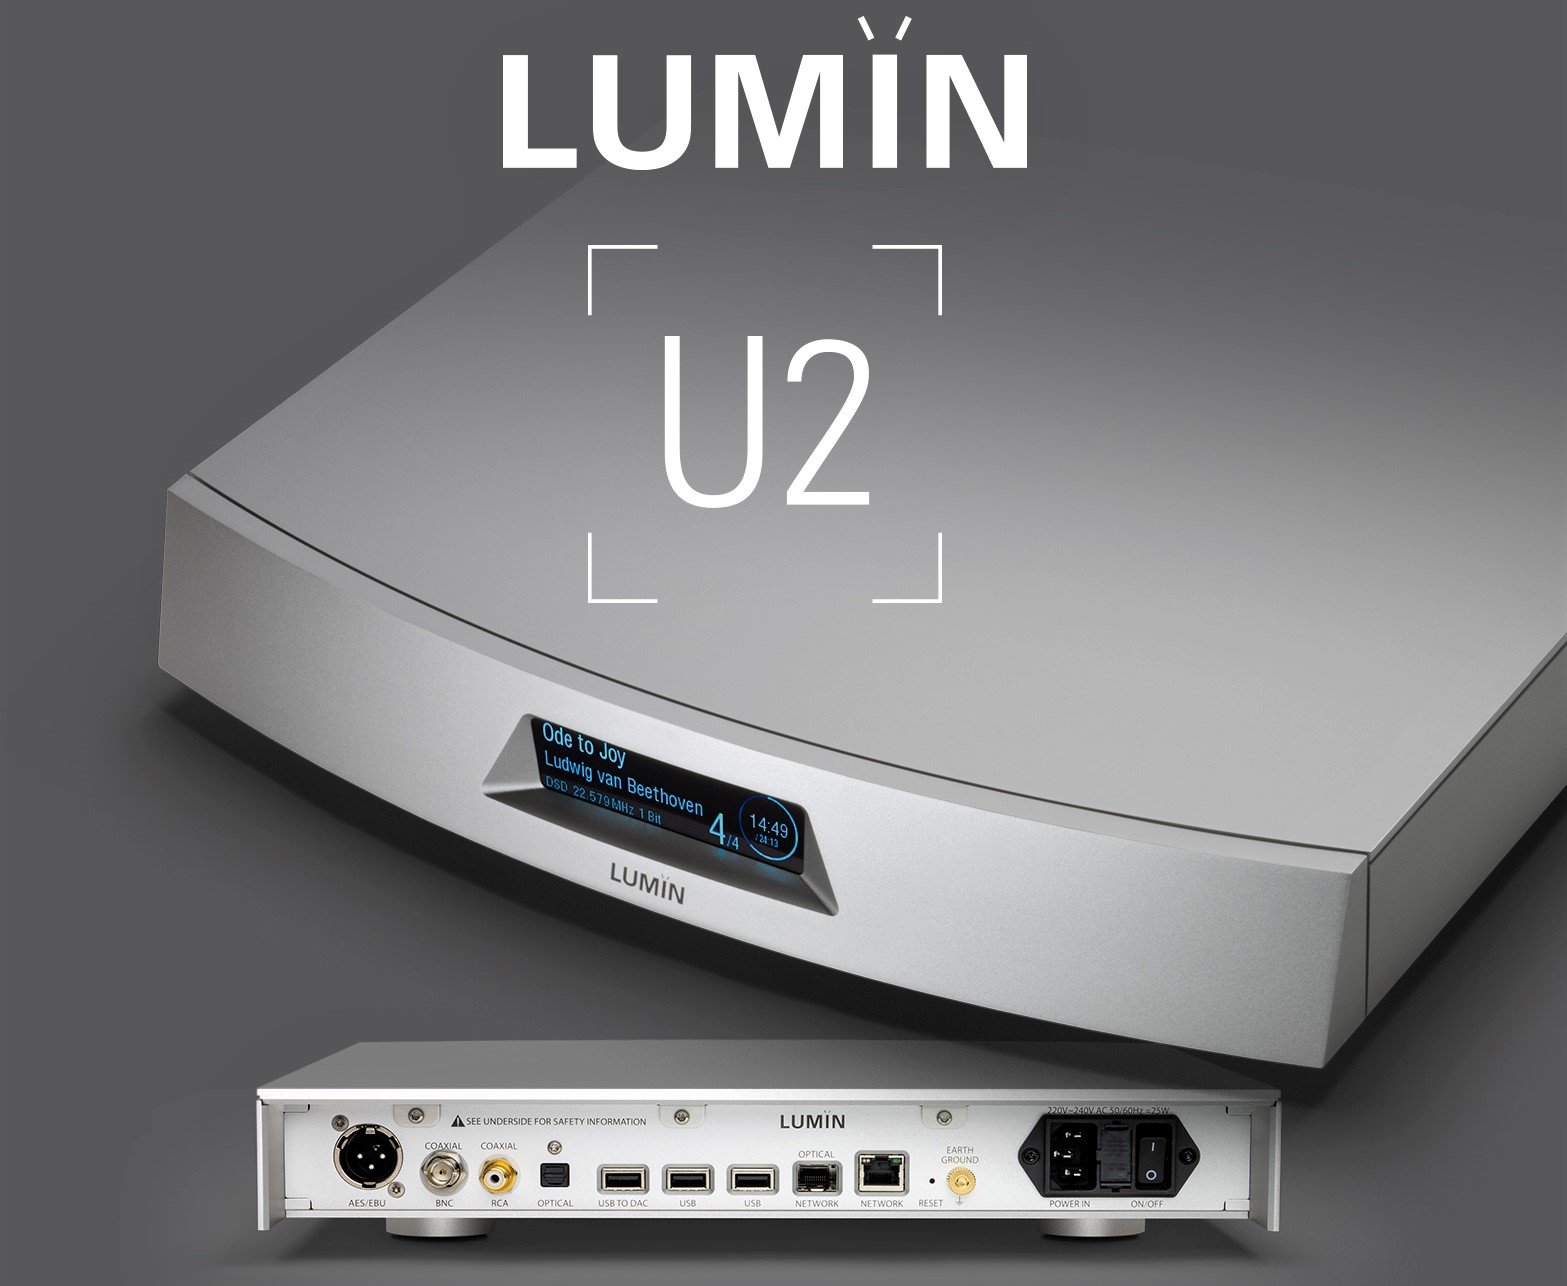 Lumin U2